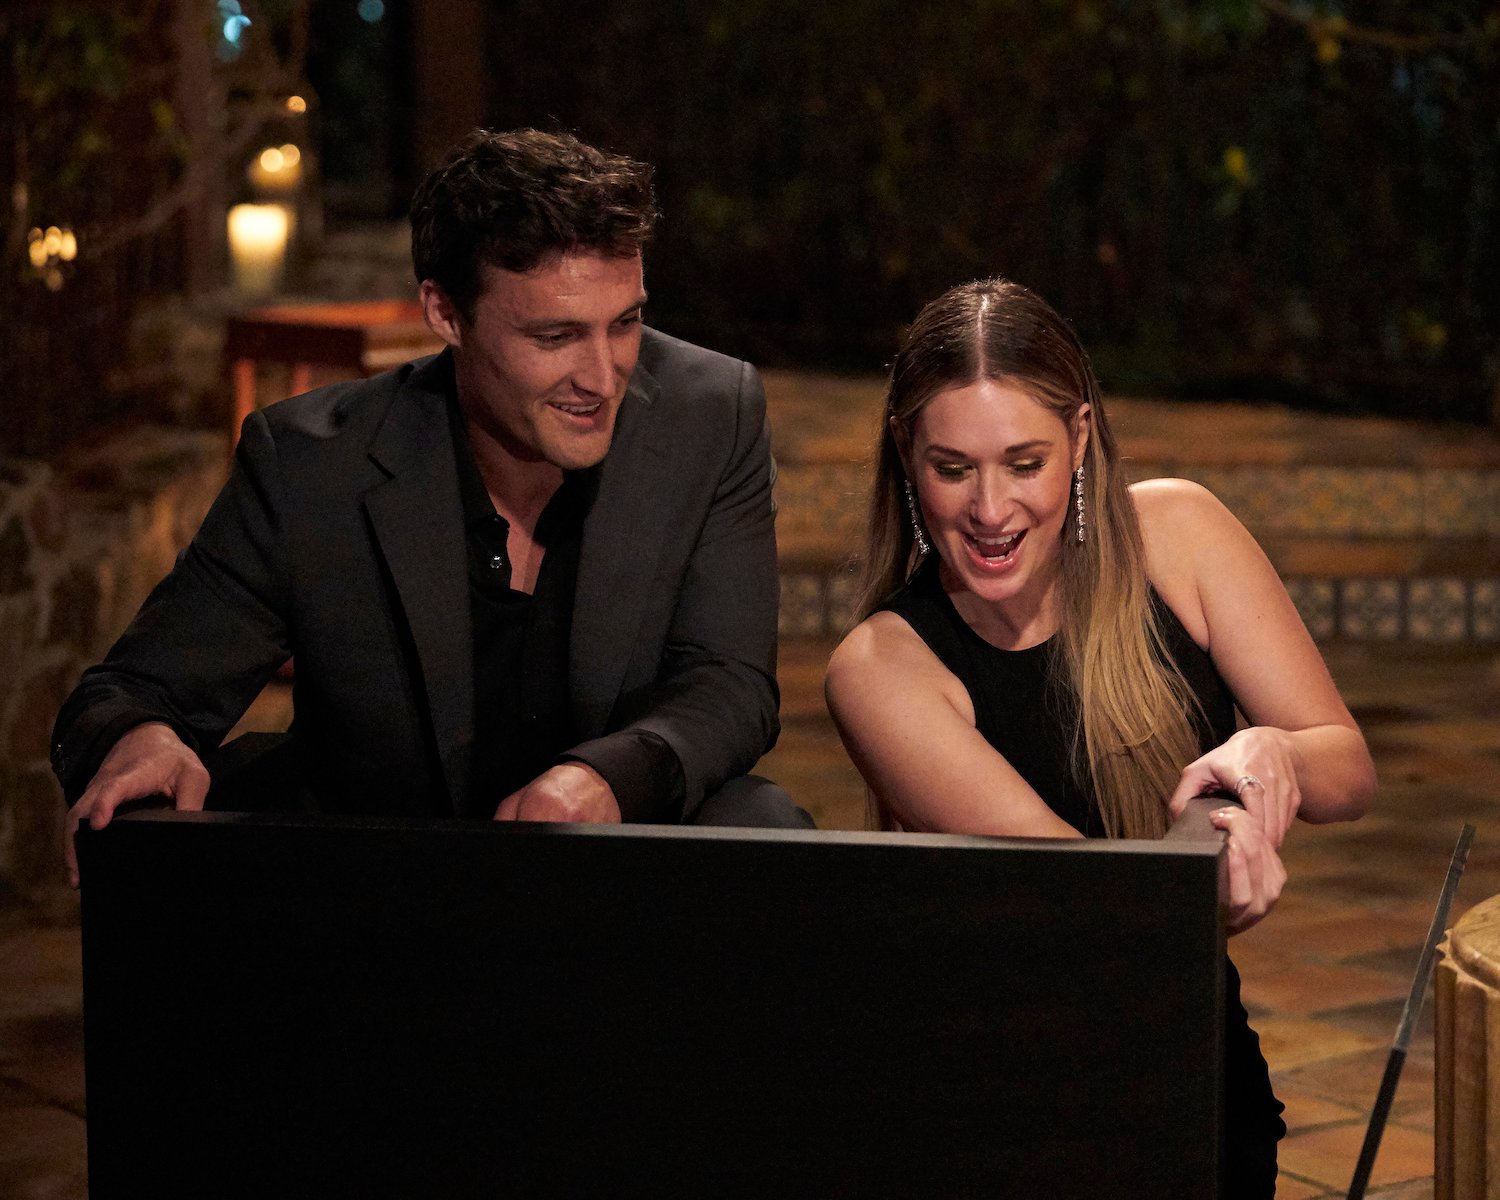 Tino Franco and Rachel Recchia laughing together on 'The Bachelorette' Season 19